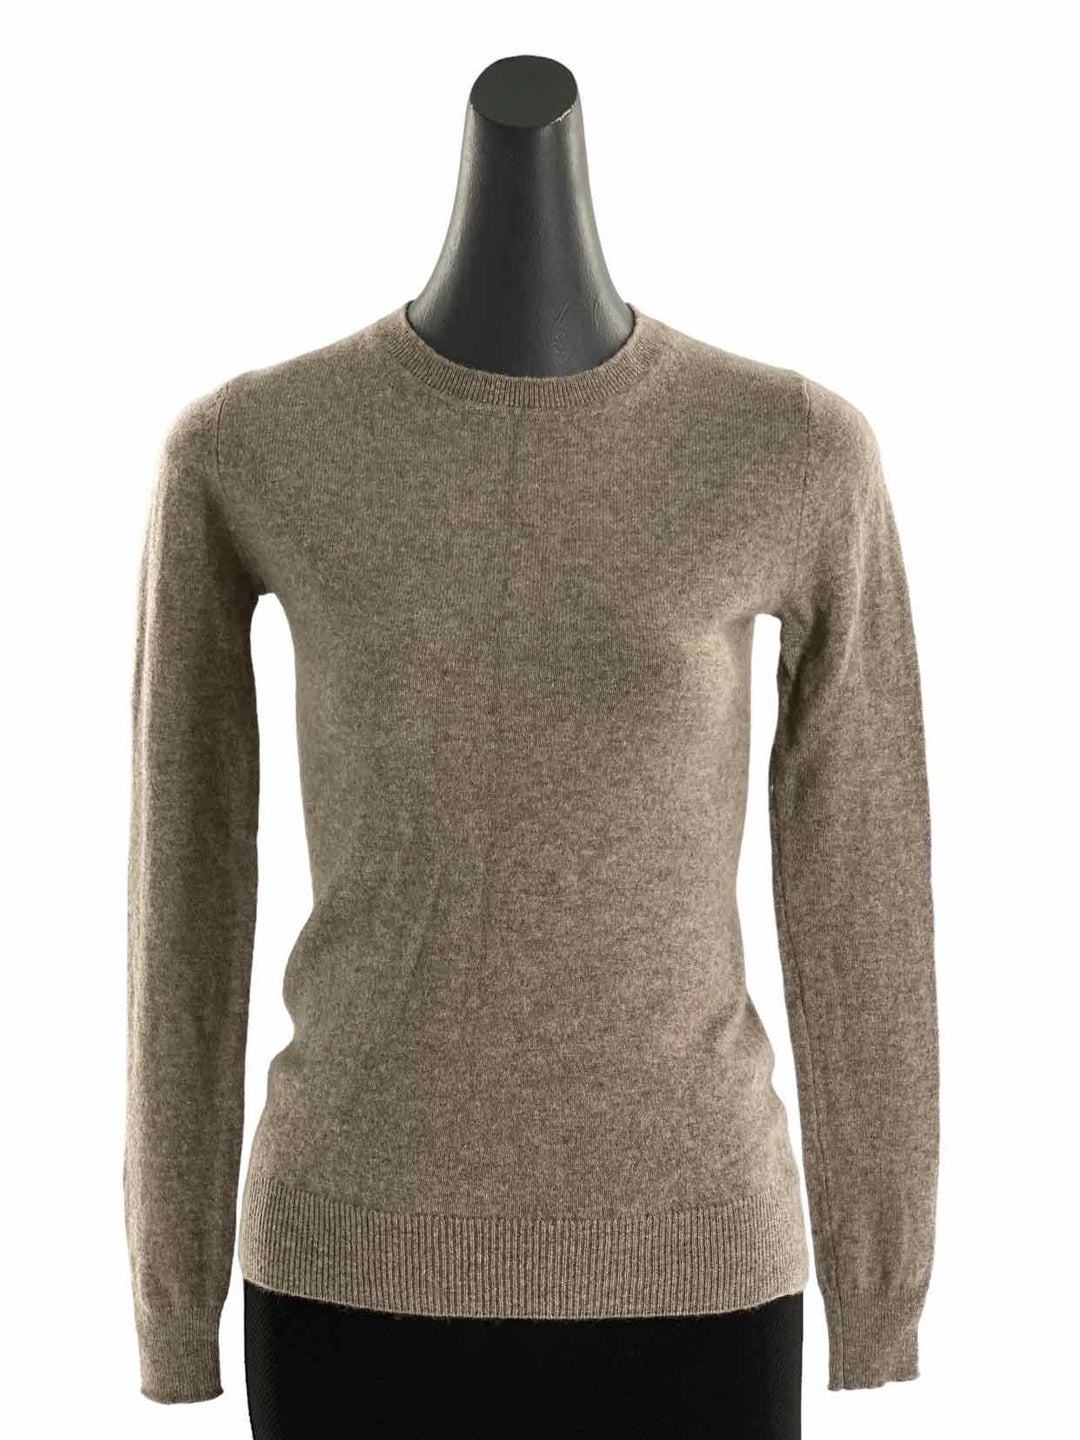 Tahari Size S Brown 100% cashmere Sweater